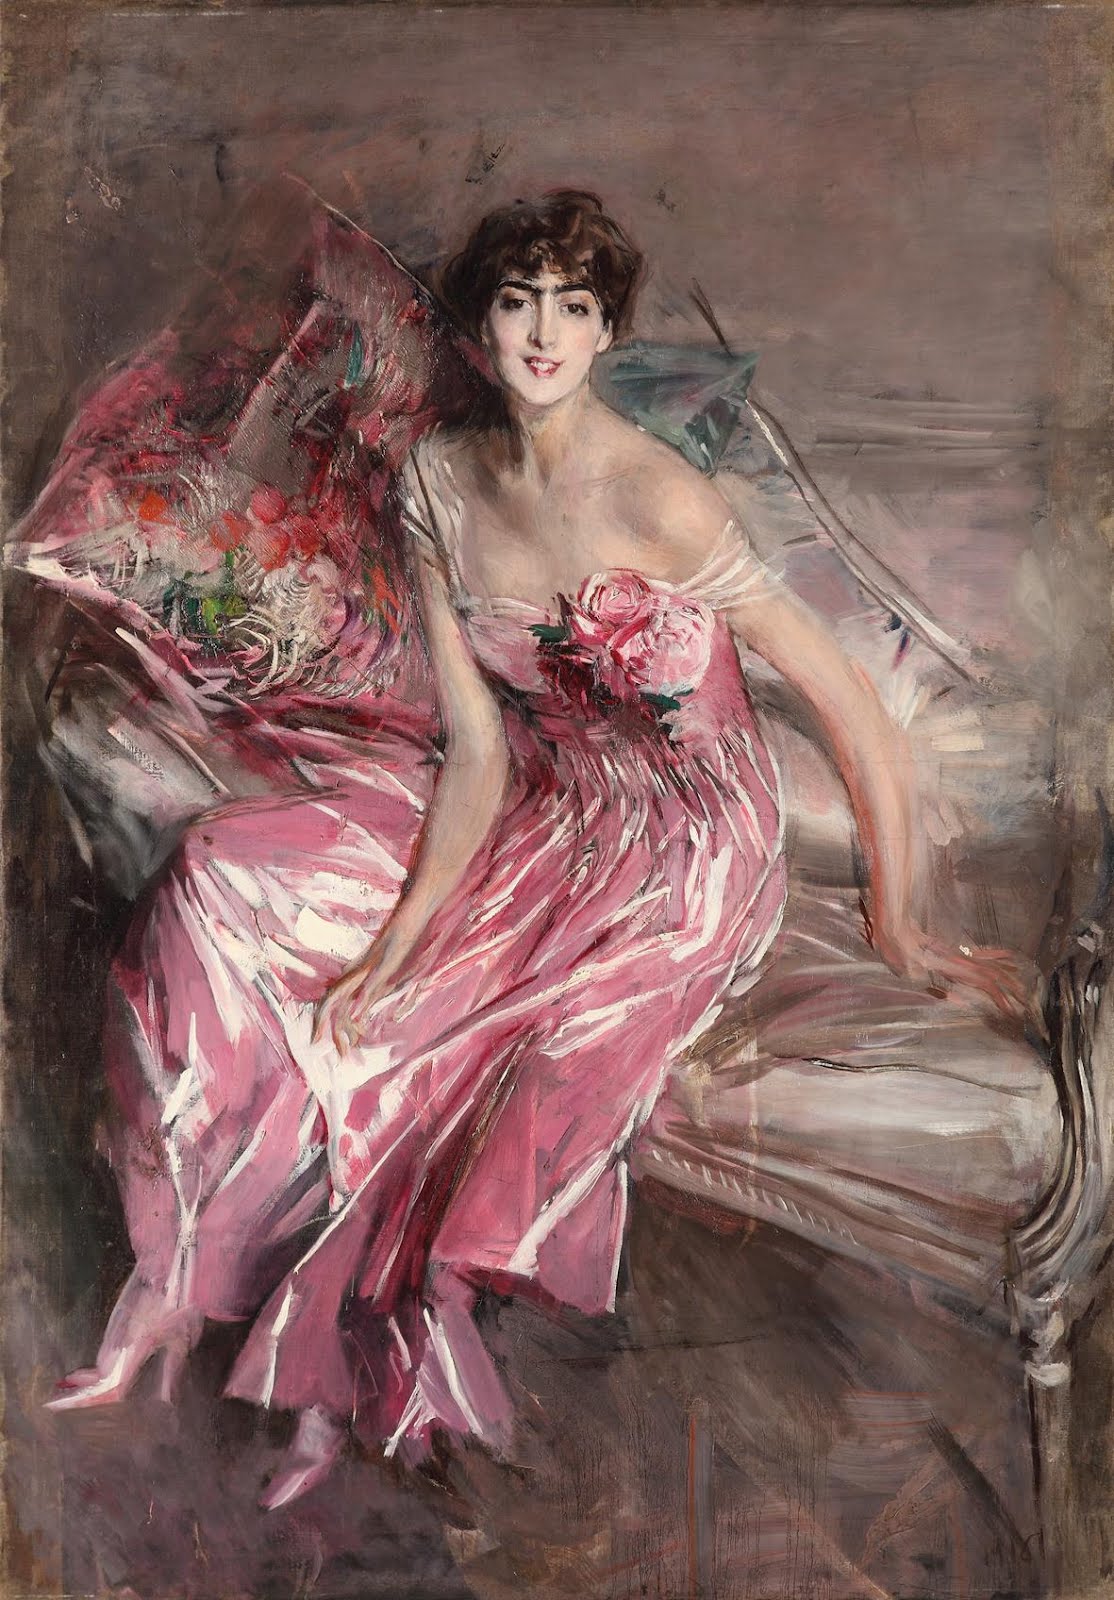 The Lady in Pink by Giovanni Boldini - 1916 - 63 x 113 cm Museo Giovanni Boldini